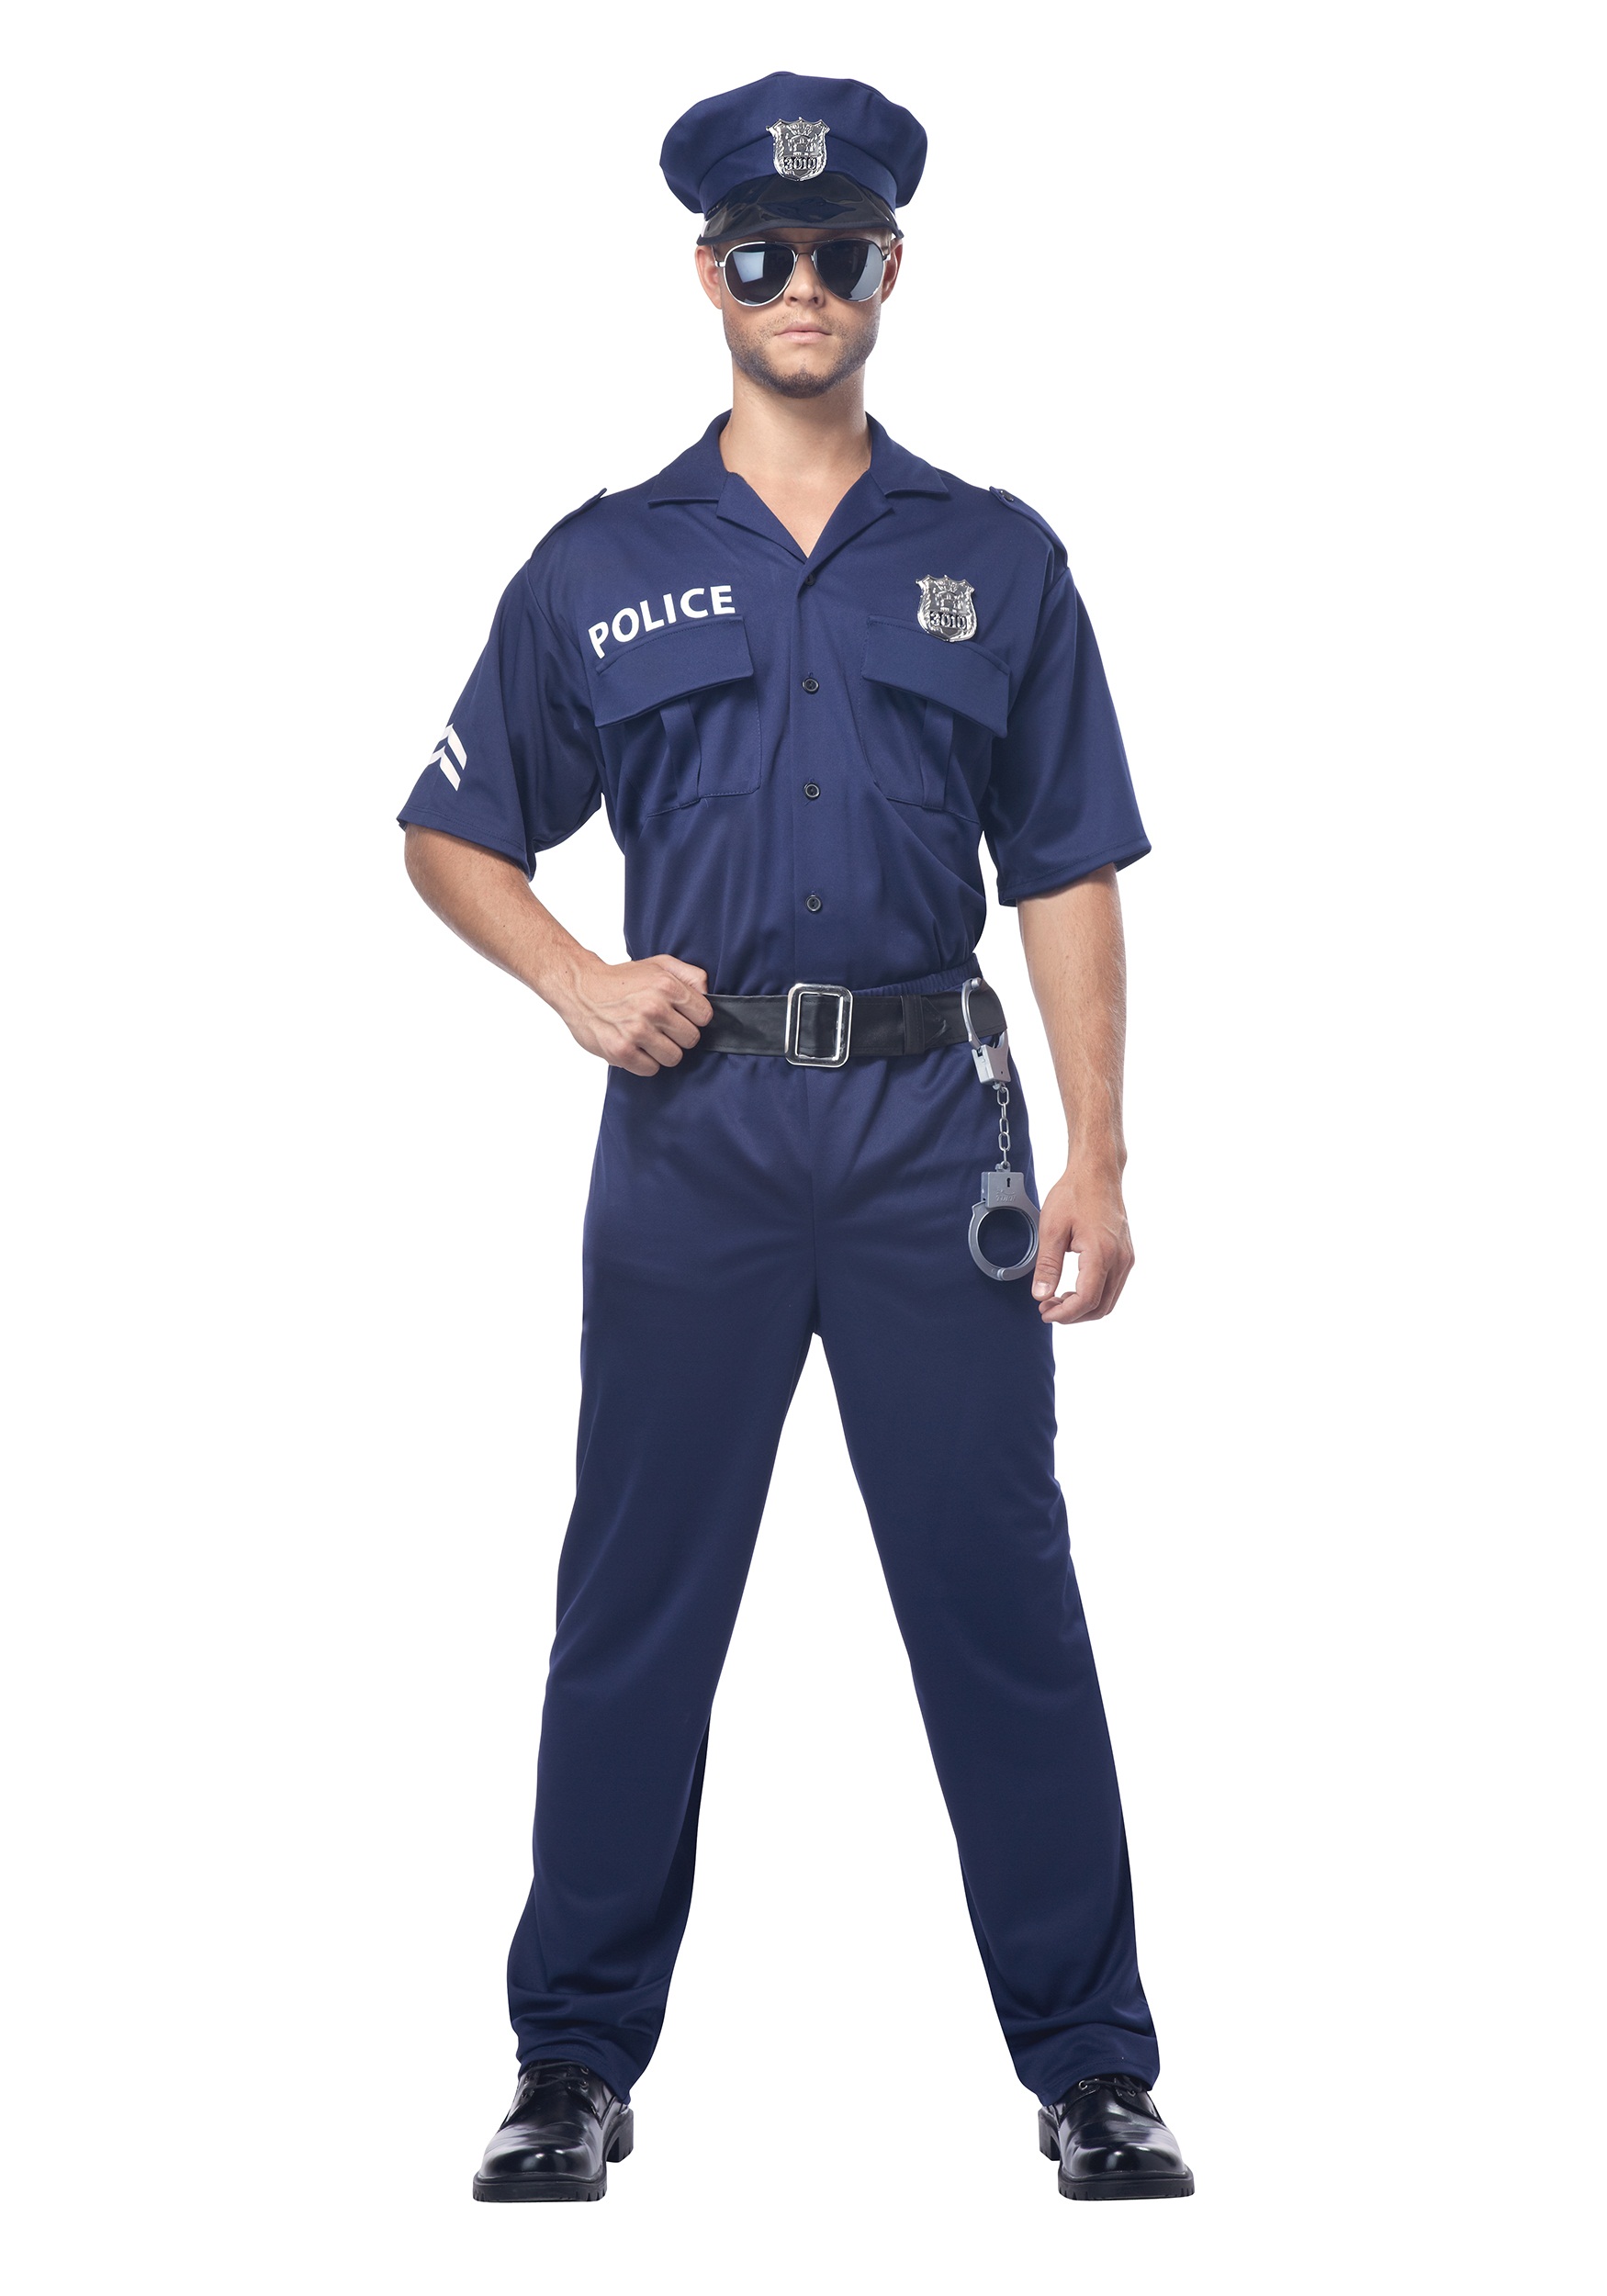 POLICE OFFICER COSTUME